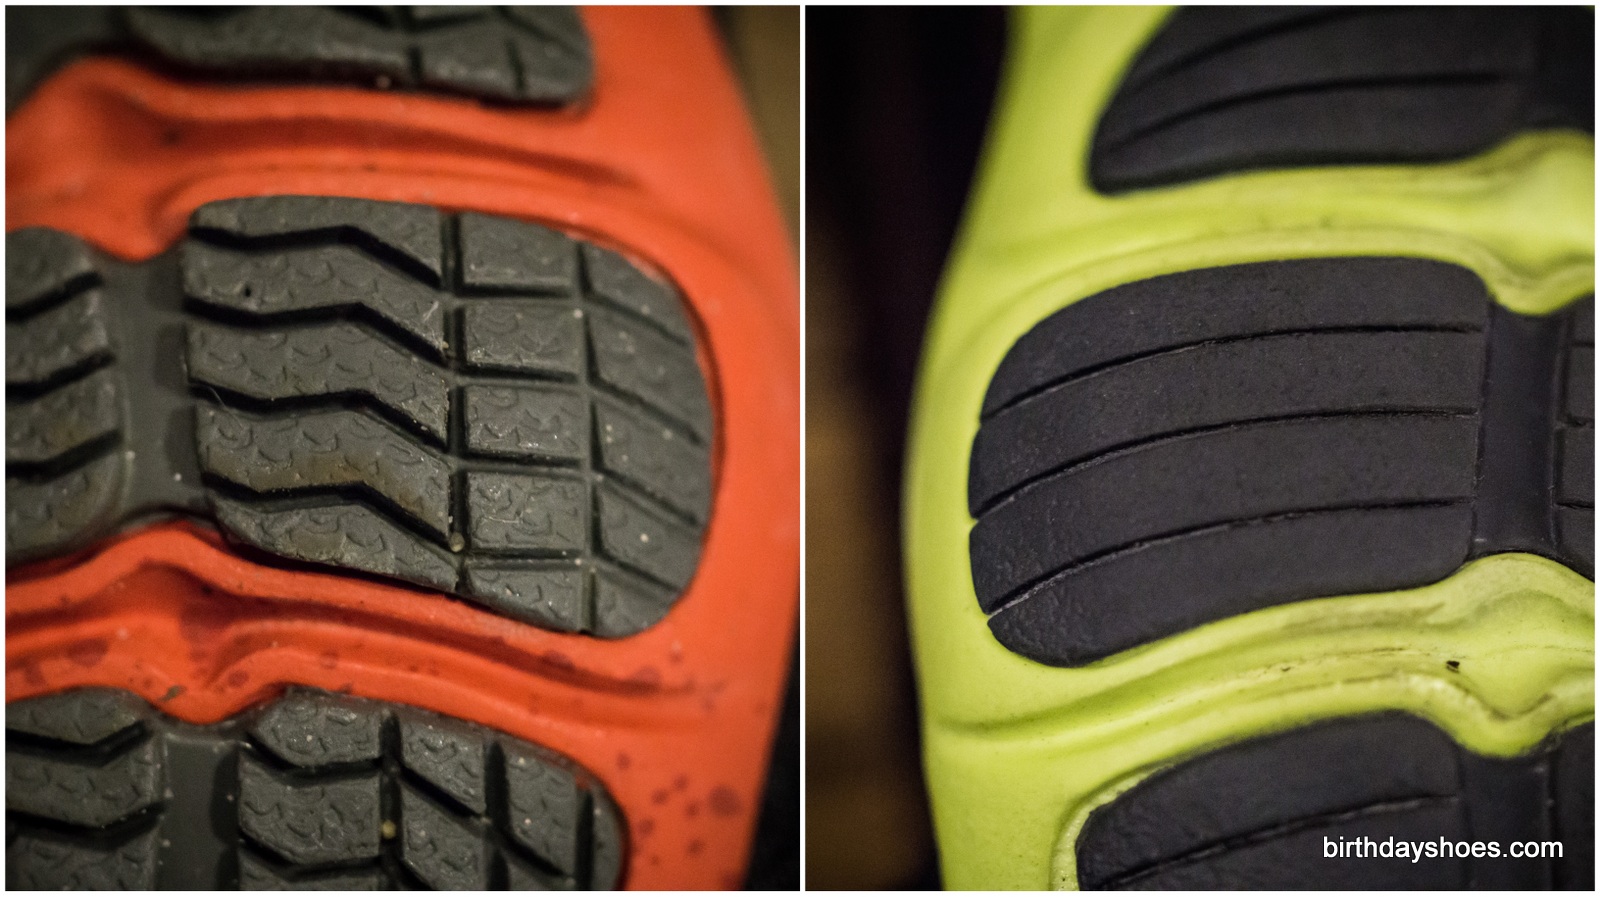 The Bikila EVO WP sole definitely looks like a snow tire vs the Bikila EVO's summer tire!